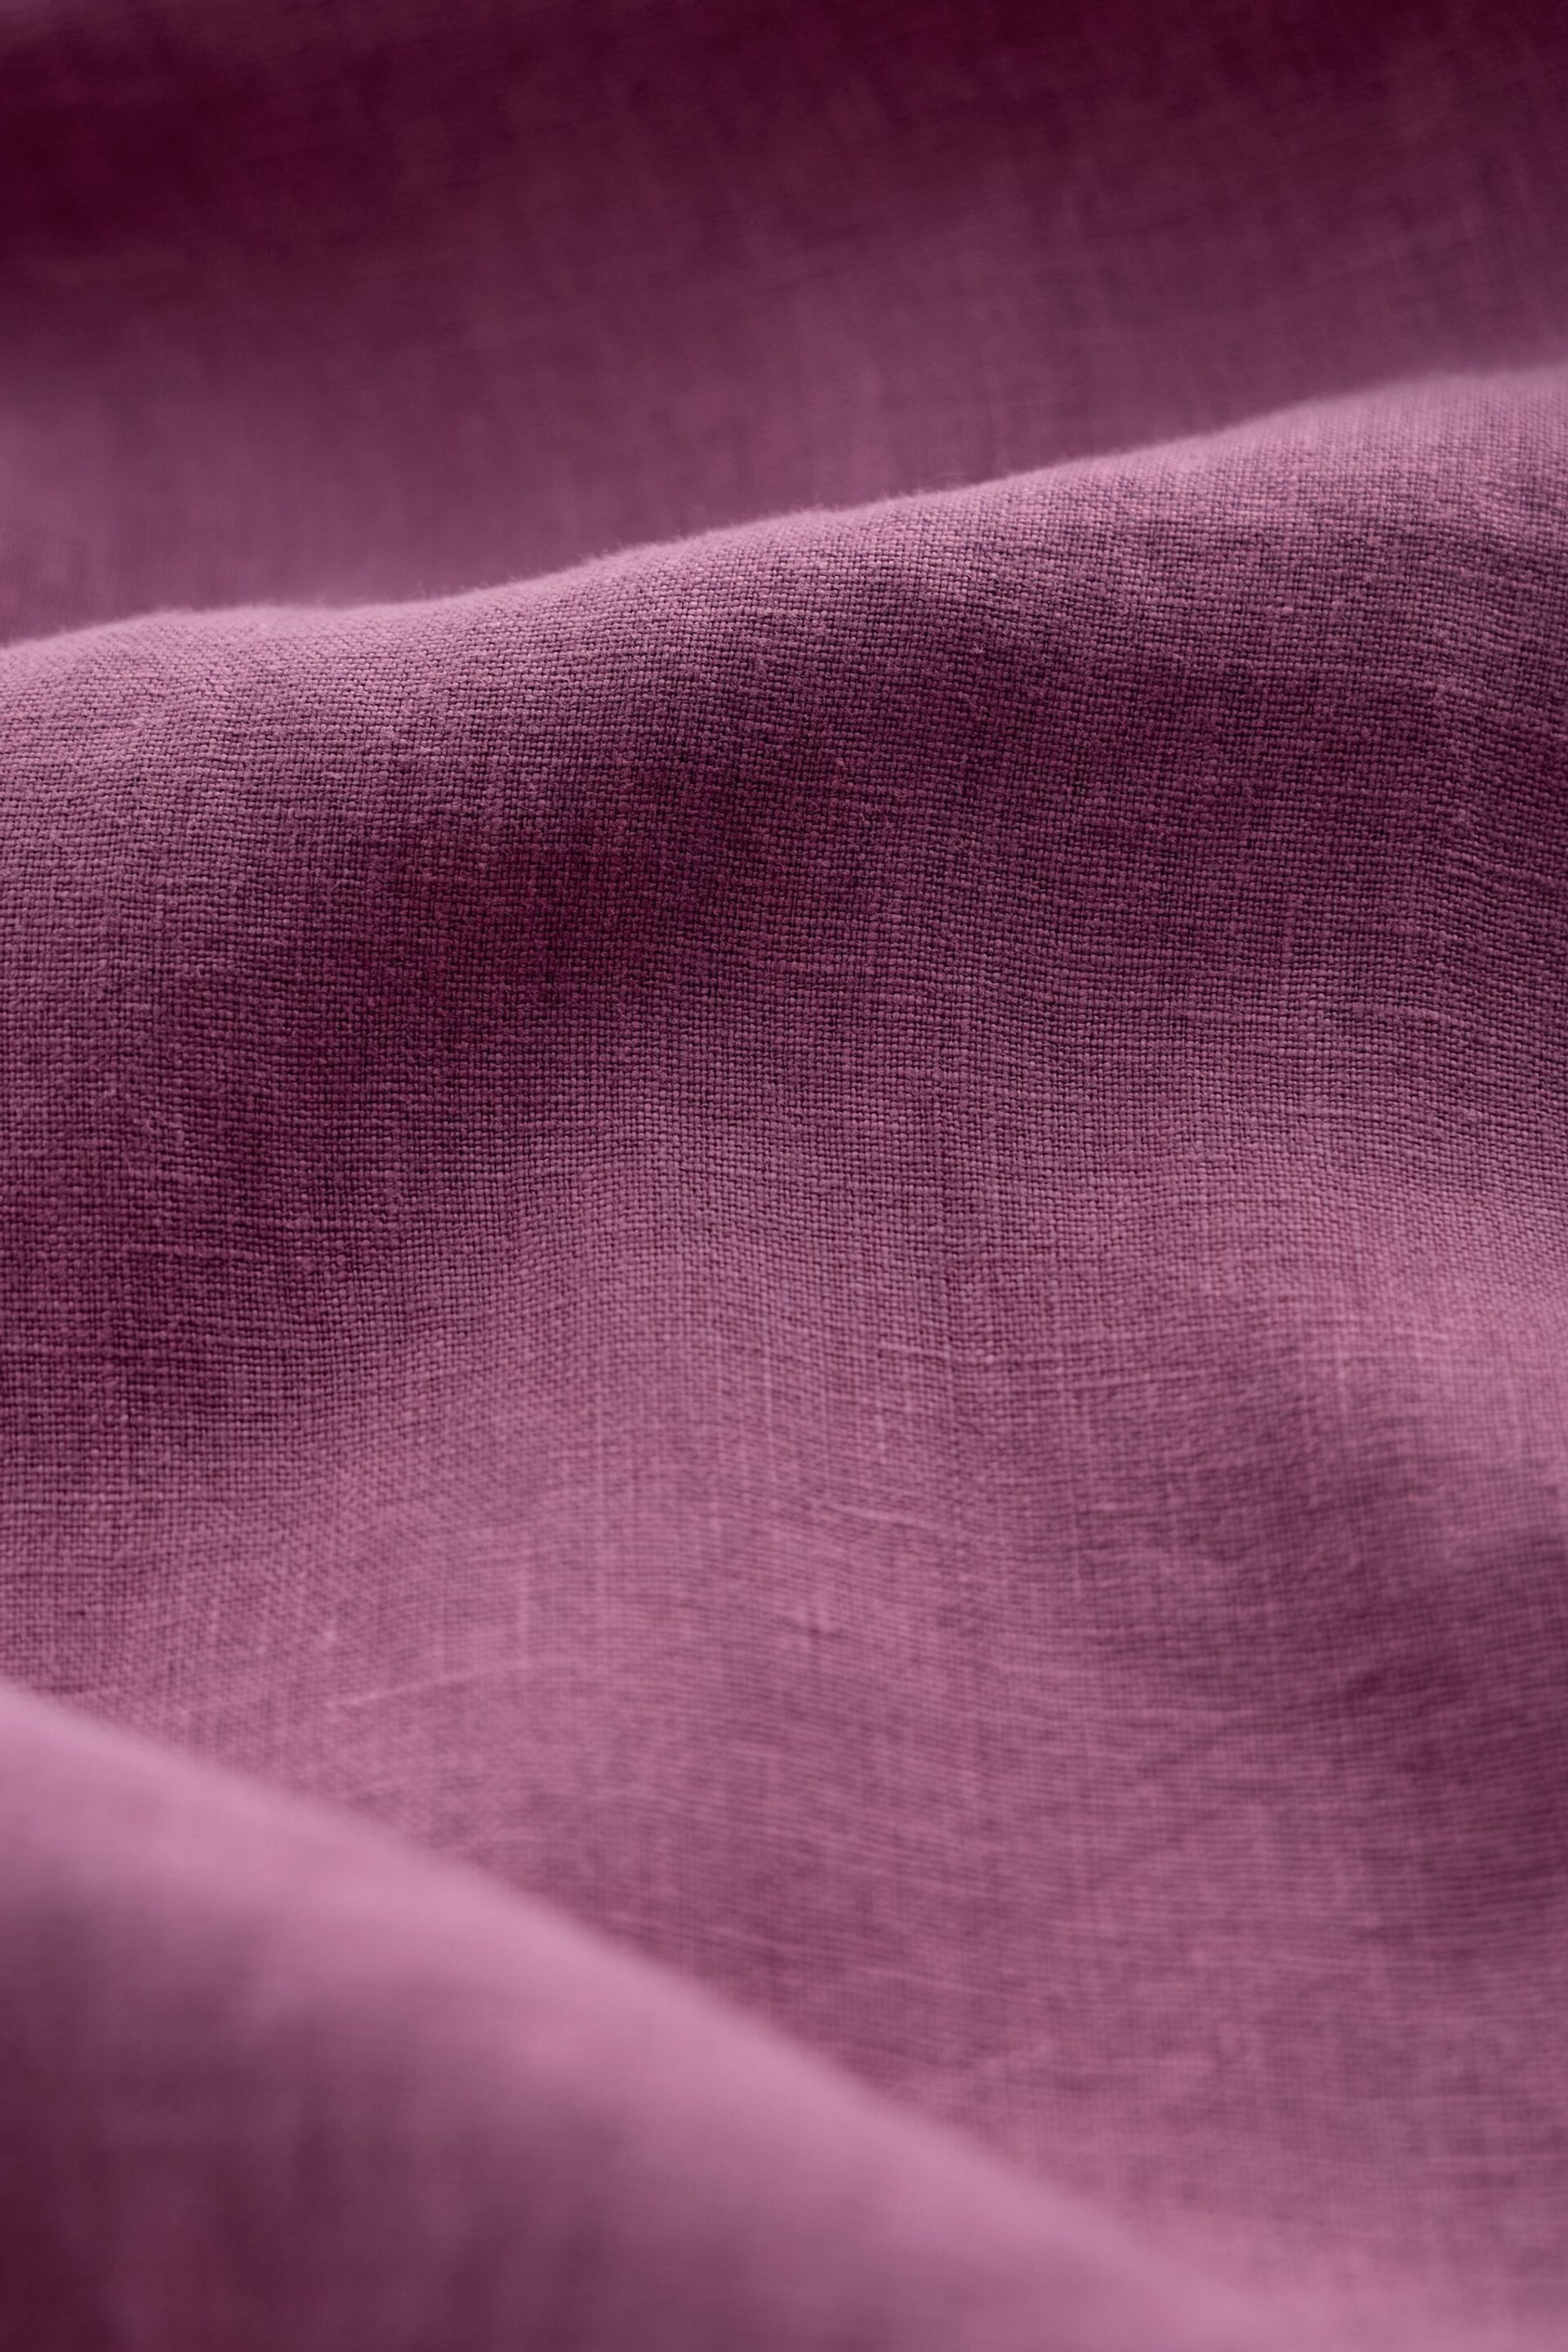 Seasalt Cornwall Pink Merrivale Linen Culottes - Image 5 of 5